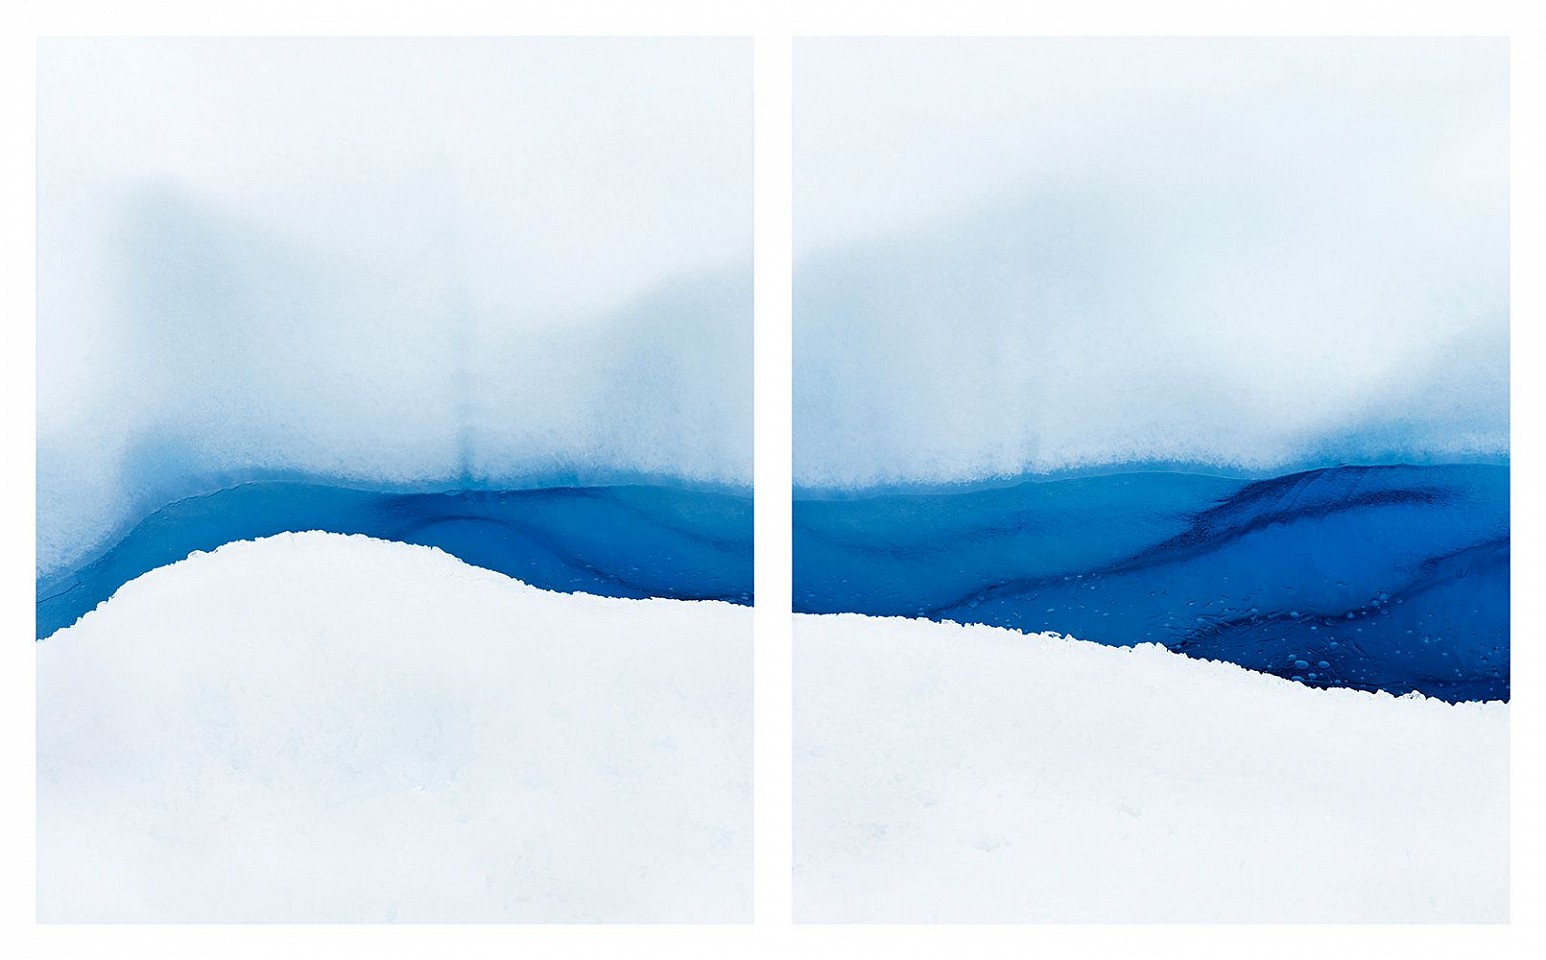 Jonathan Smith, Glacier #4
Chromogenic Print
30x48" ed 8, 40x64" ed 5, 50x80" ed 3
7563